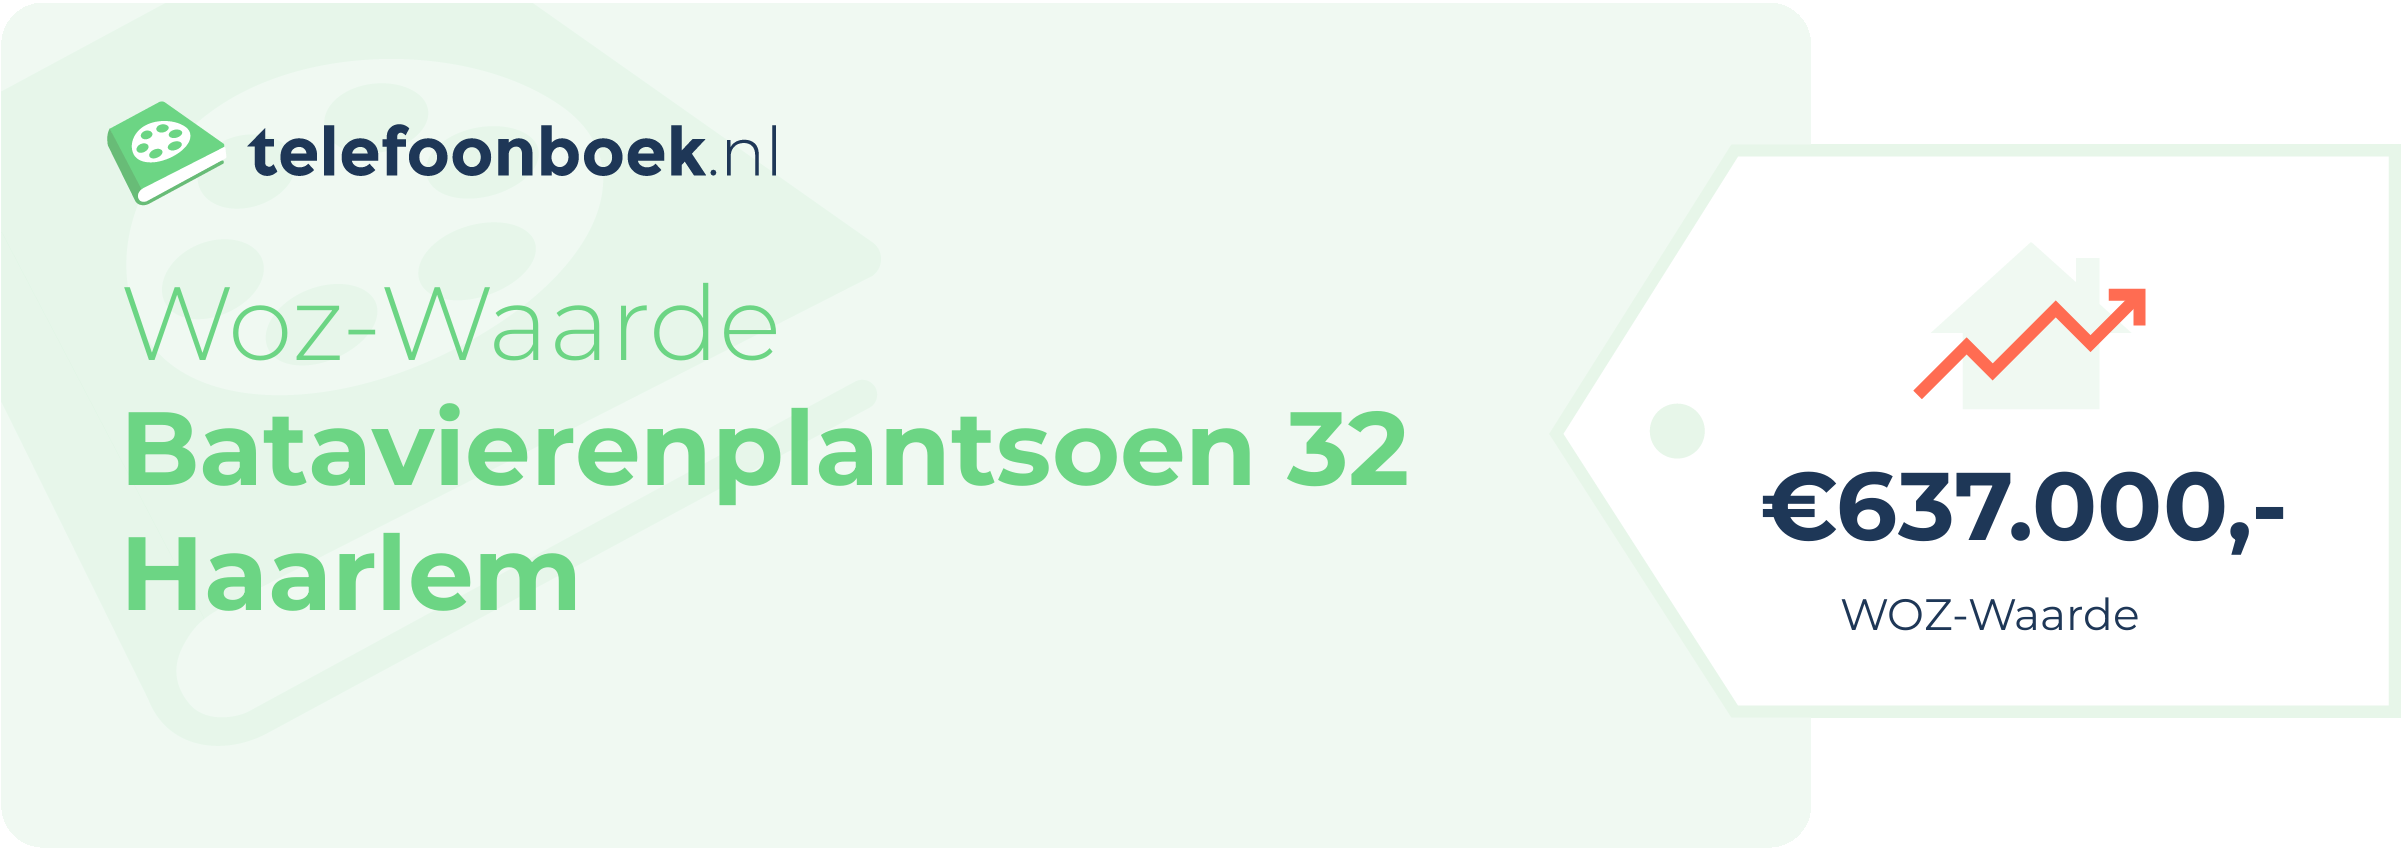 WOZ-waarde Batavierenplantsoen 32 Haarlem